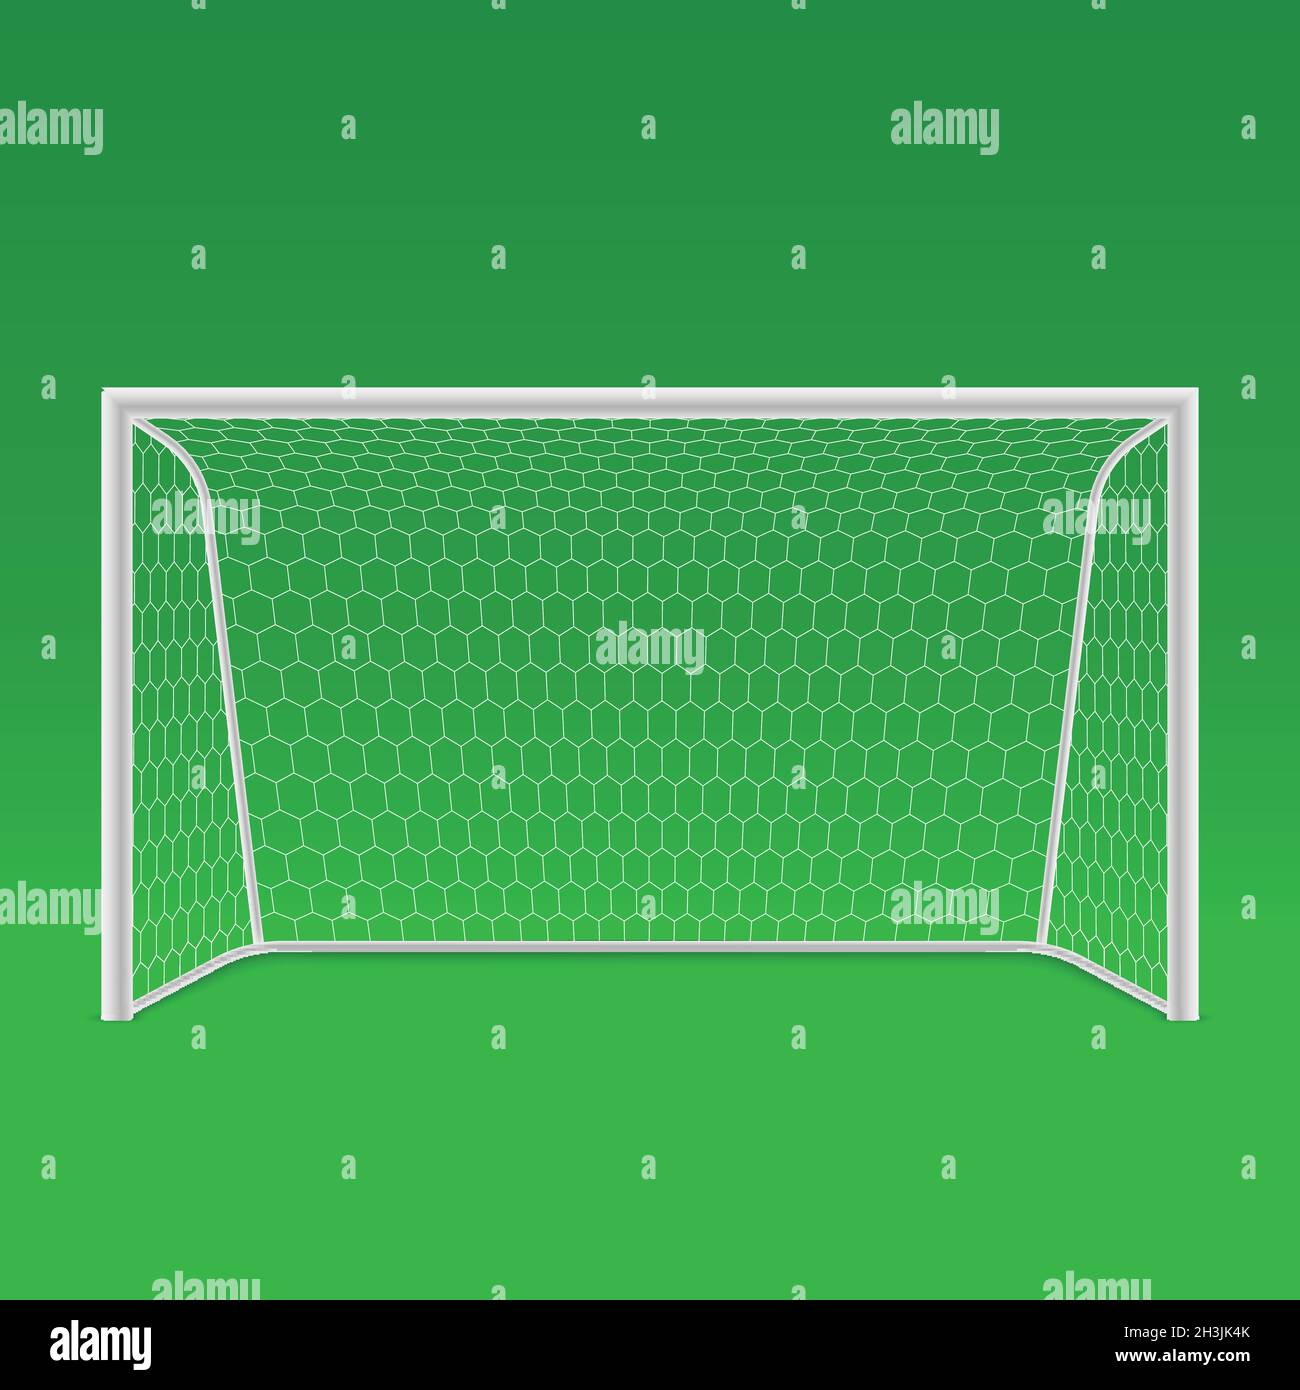 3d-Fußball-Tor Vorderansicht auf grünem Hintergrund. Vektorgrafik Stock Vektor